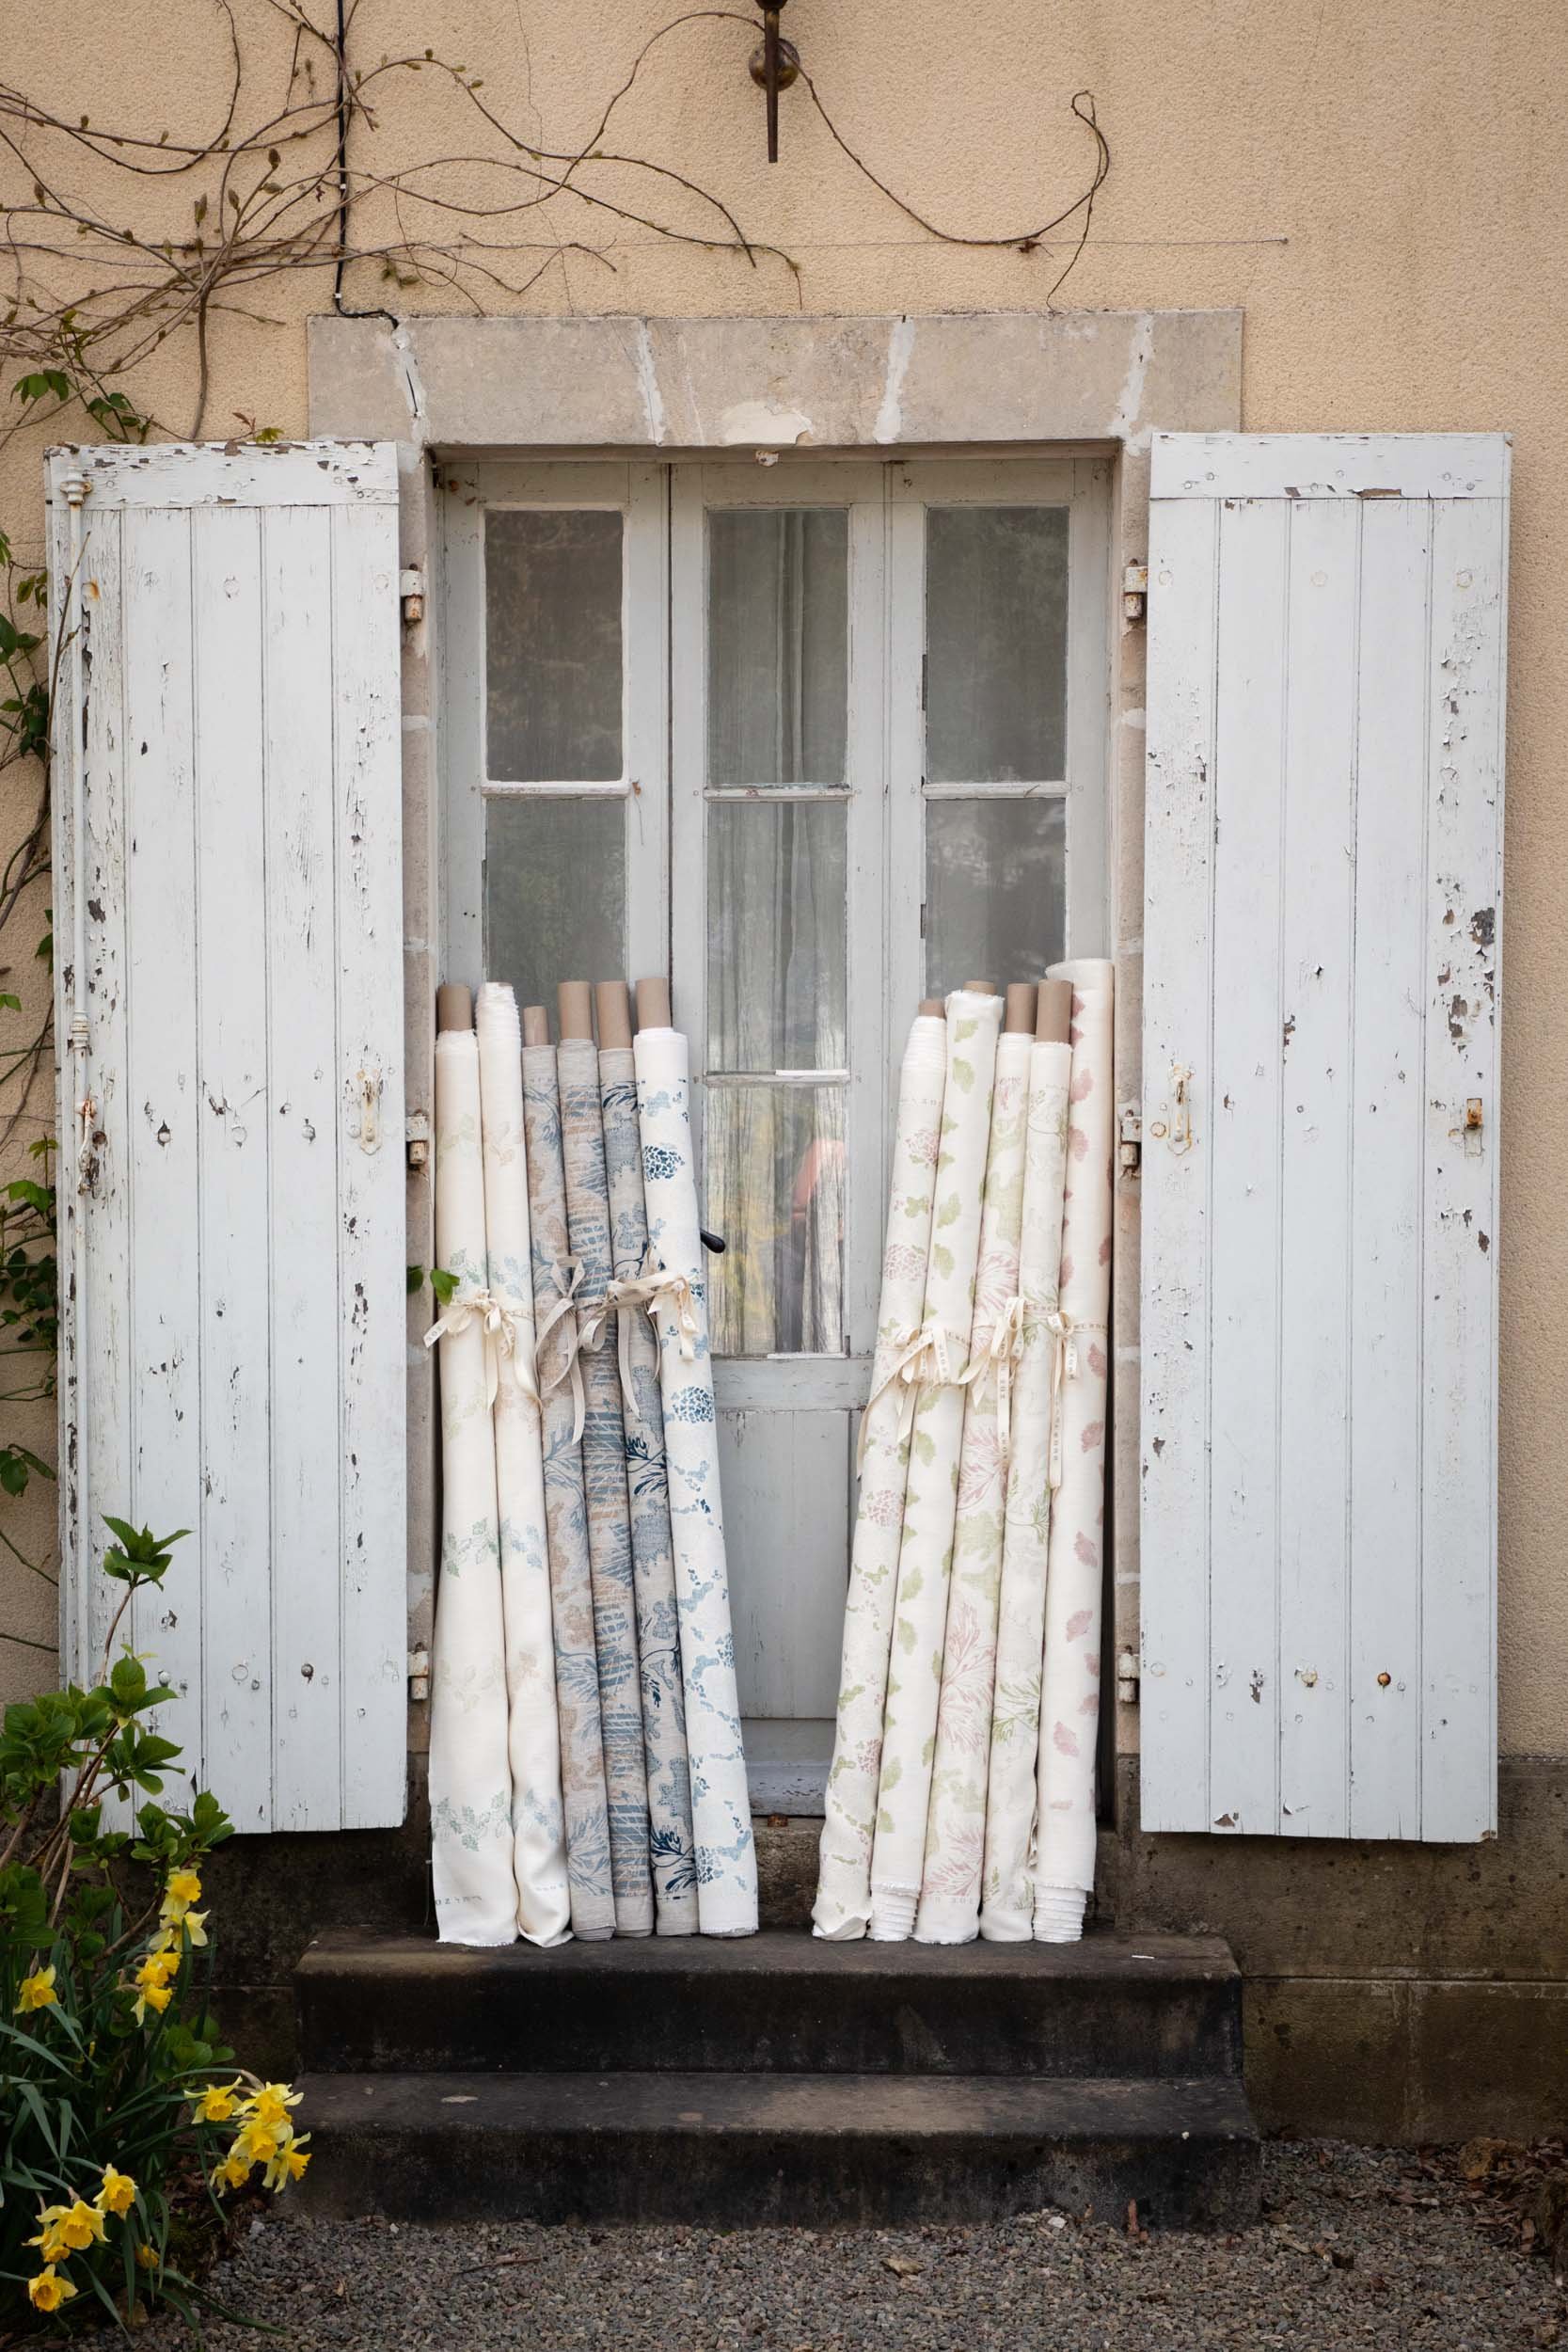 Vivre Le Rêve’ Collection, a French inspired range of pure linen fabrics by designer Zoe Glencross -19.jpg